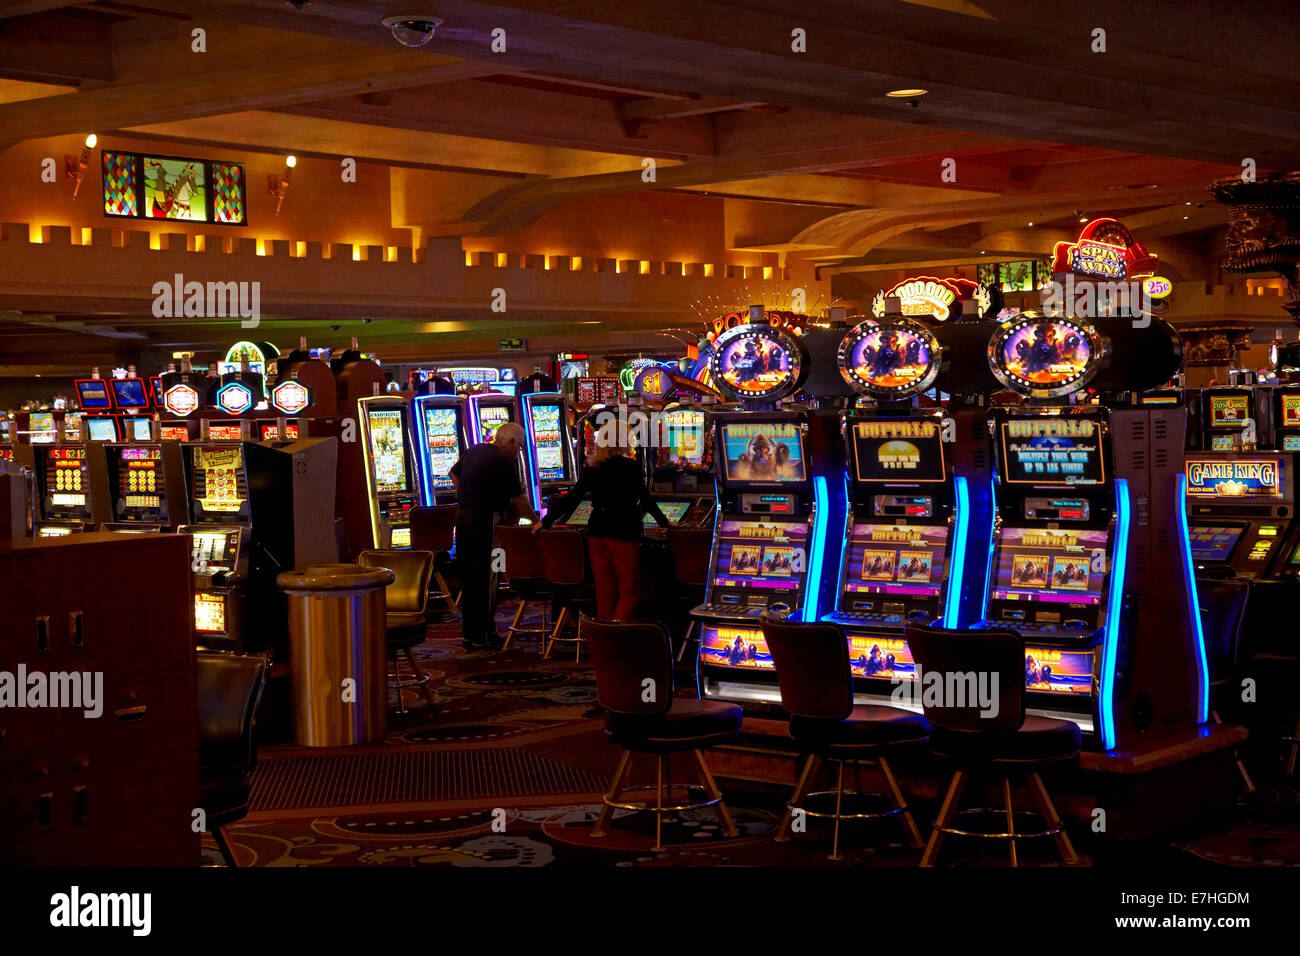 No deposit free spins fair go casino